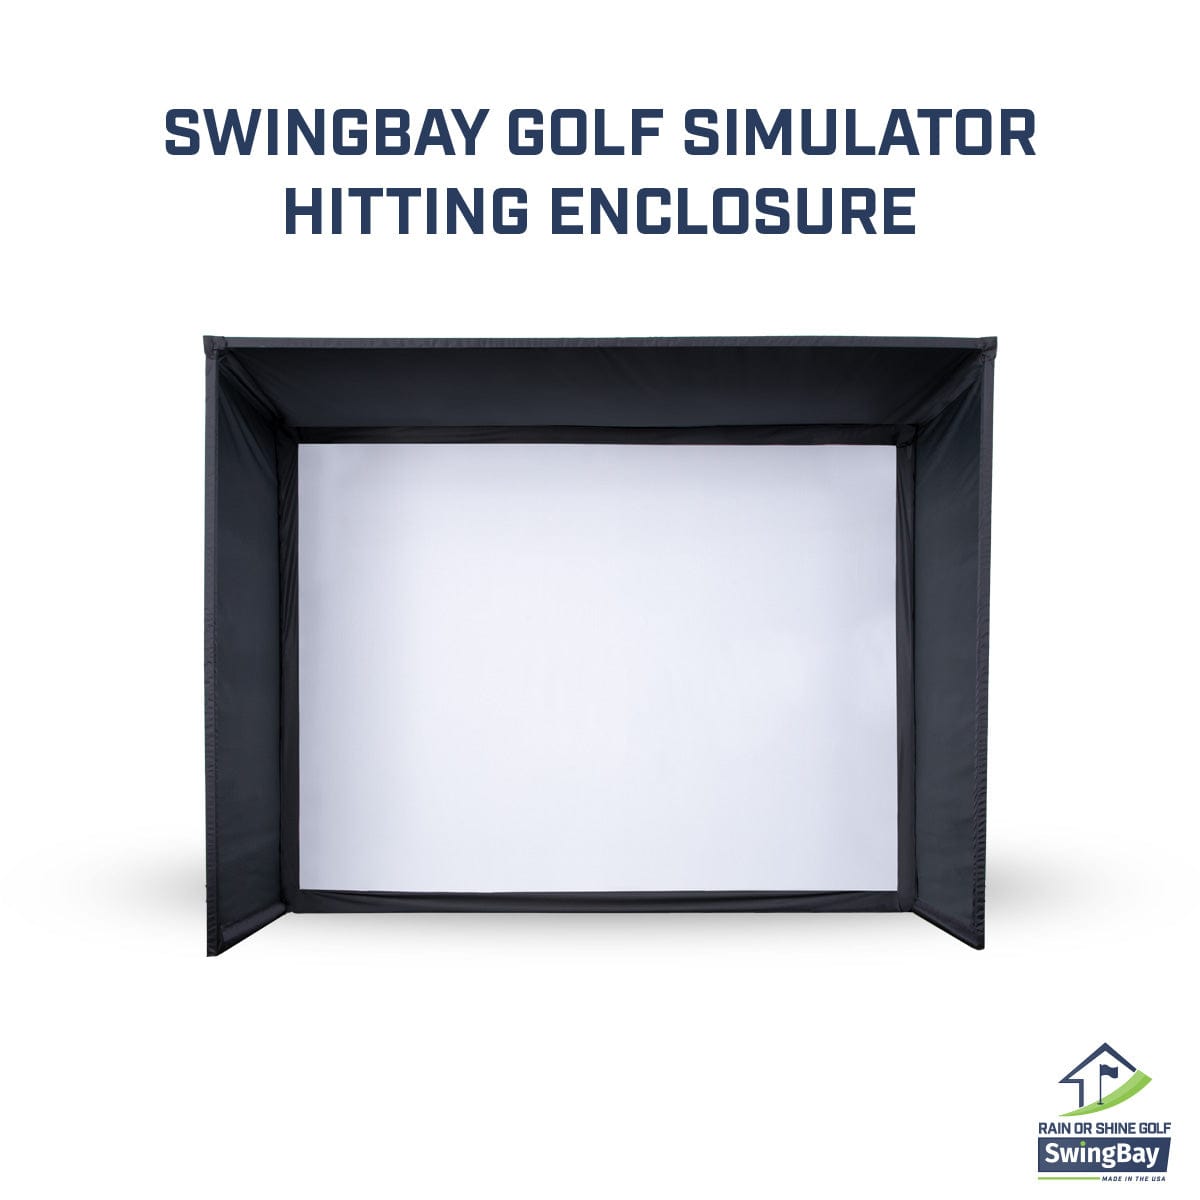 Foresight Sports GC3 SwingBay Golf Simulator Package